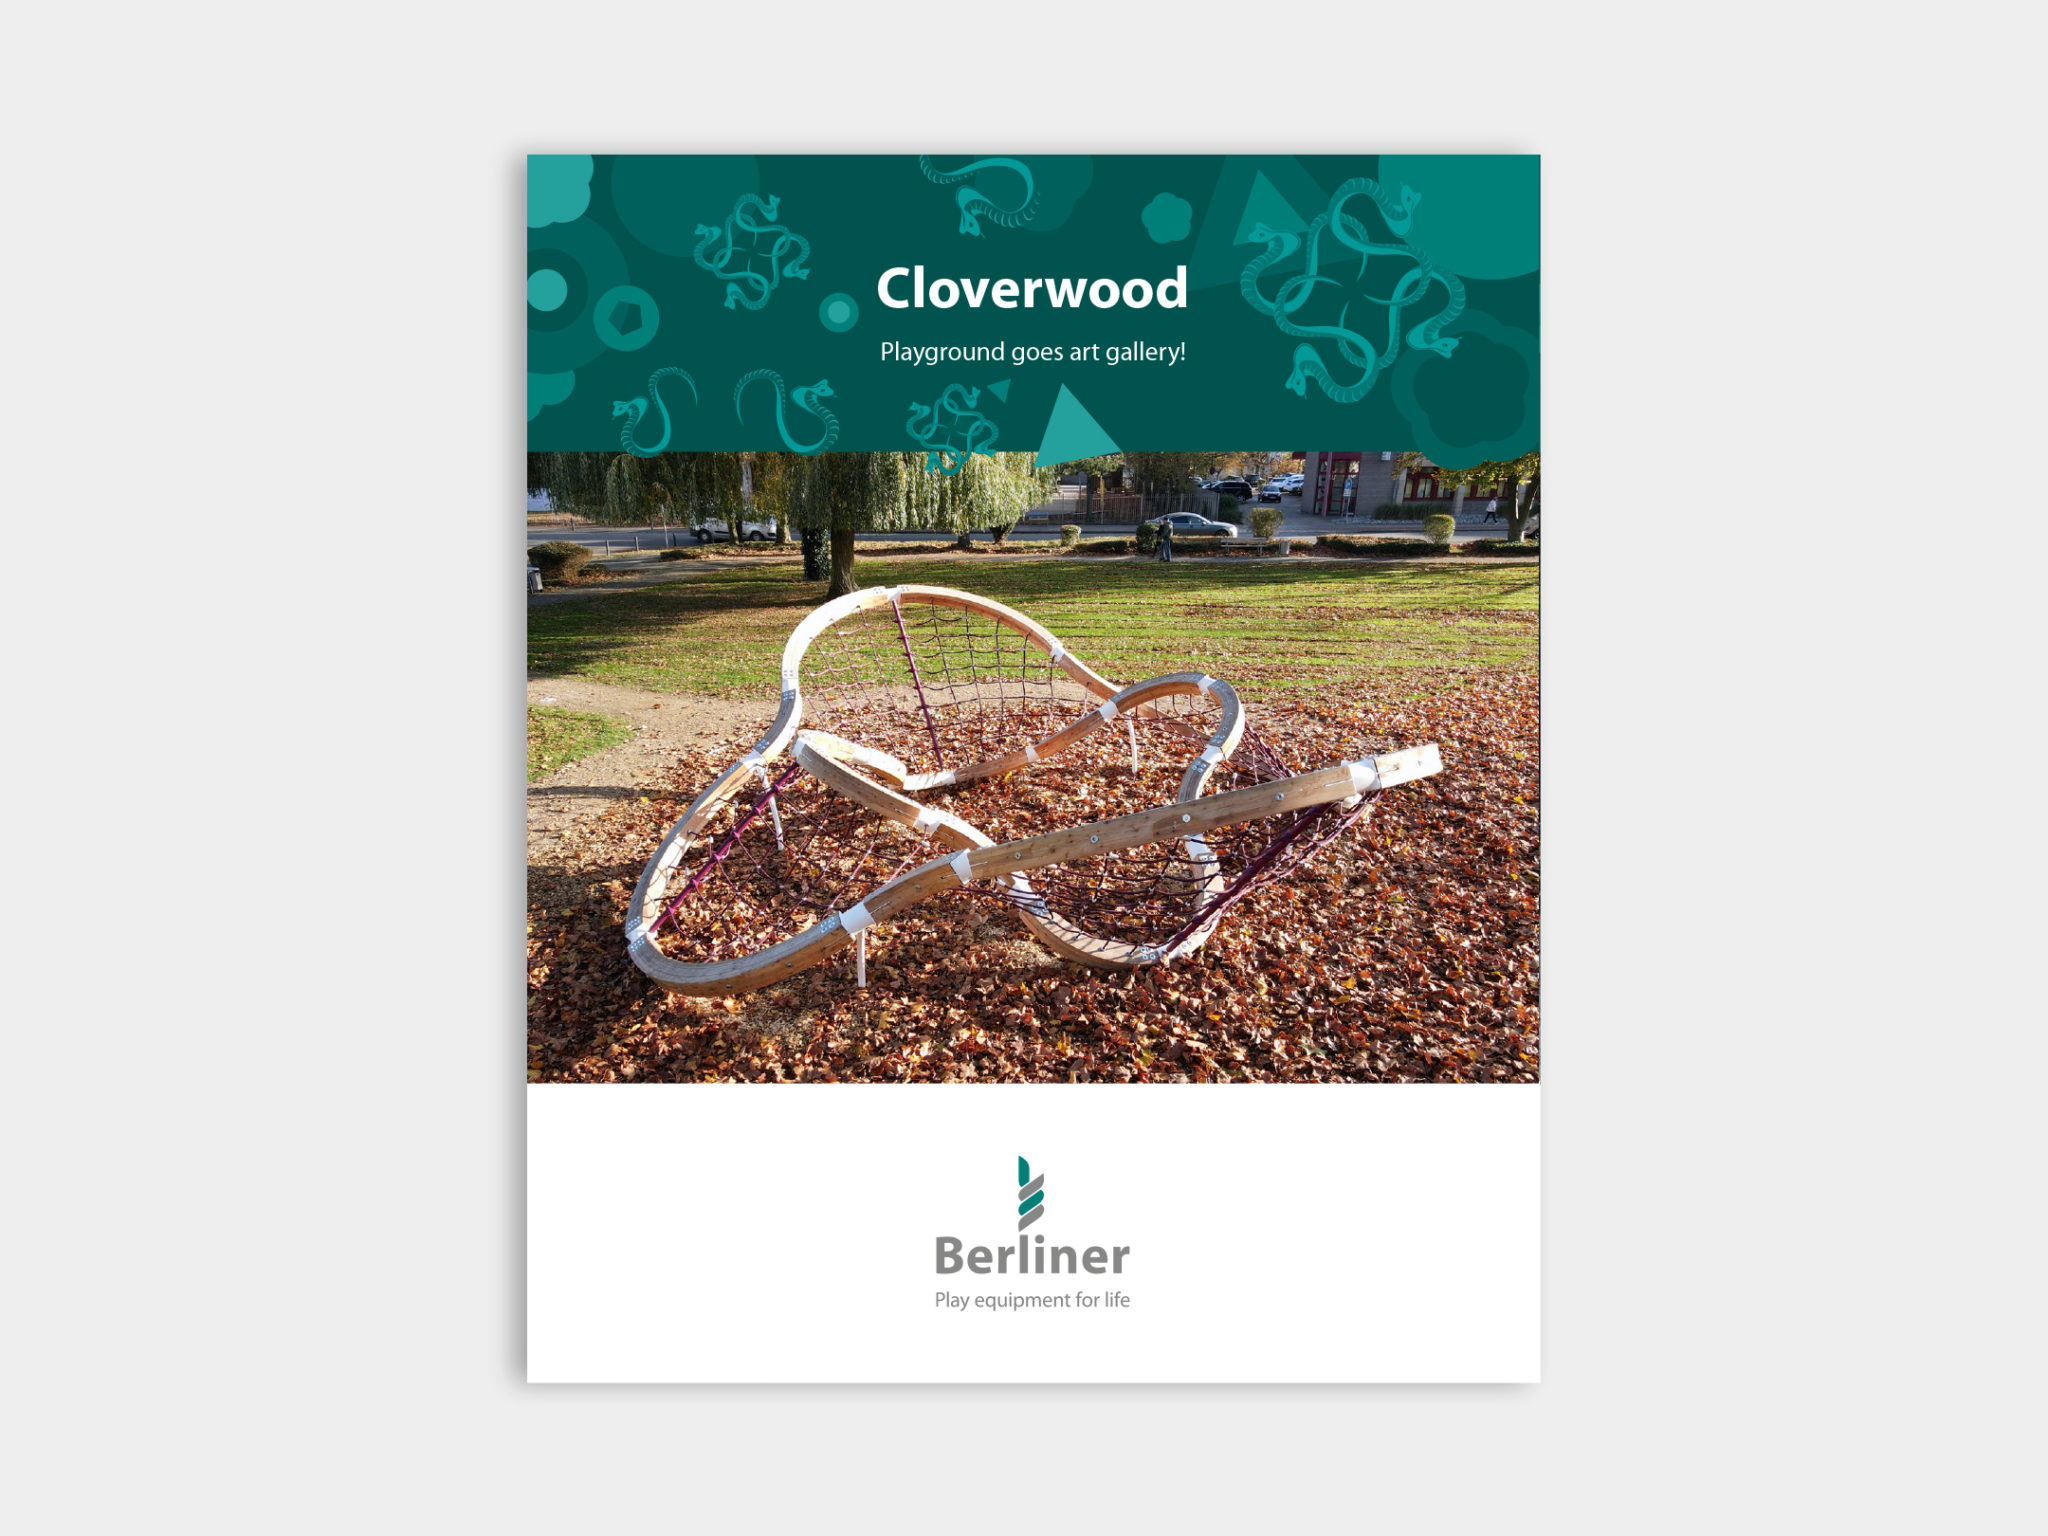 Cloverwood